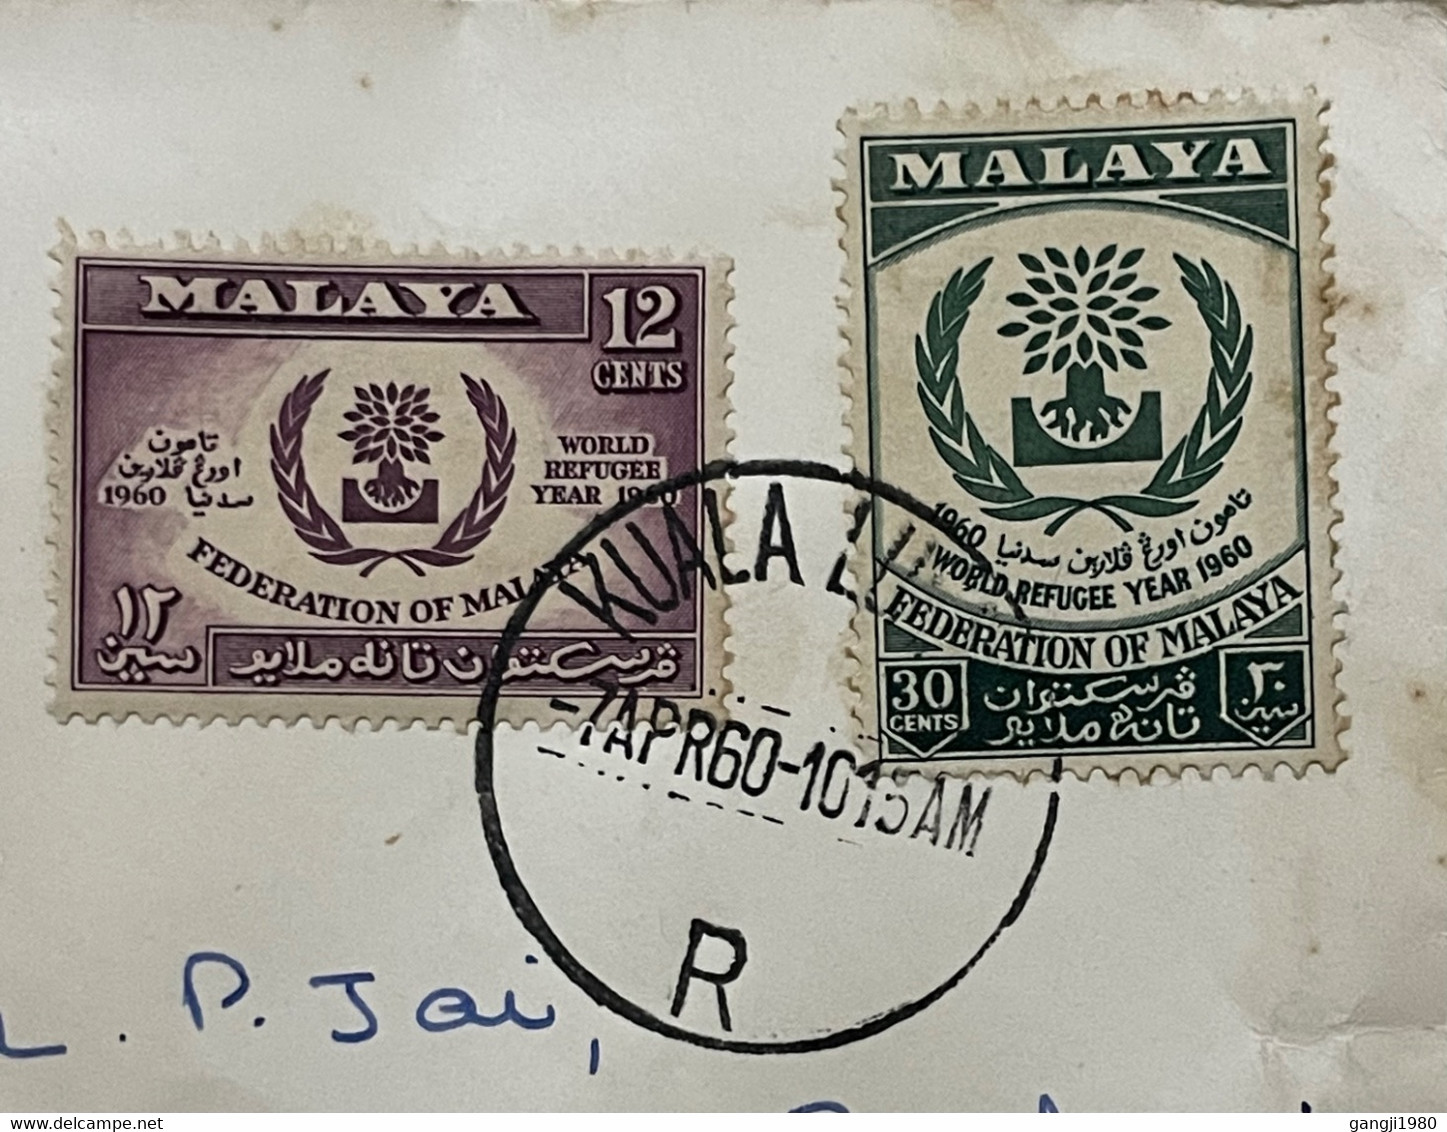 MALAYA-1960, WORLD REFUGE YEAR, FDC COVER, USED TO INDIA. L. P. JAI  CRICKET PLAYER' & PHILATELIST, GLOBE, FLAG COUNTRY - Malaya (British Military Administration)